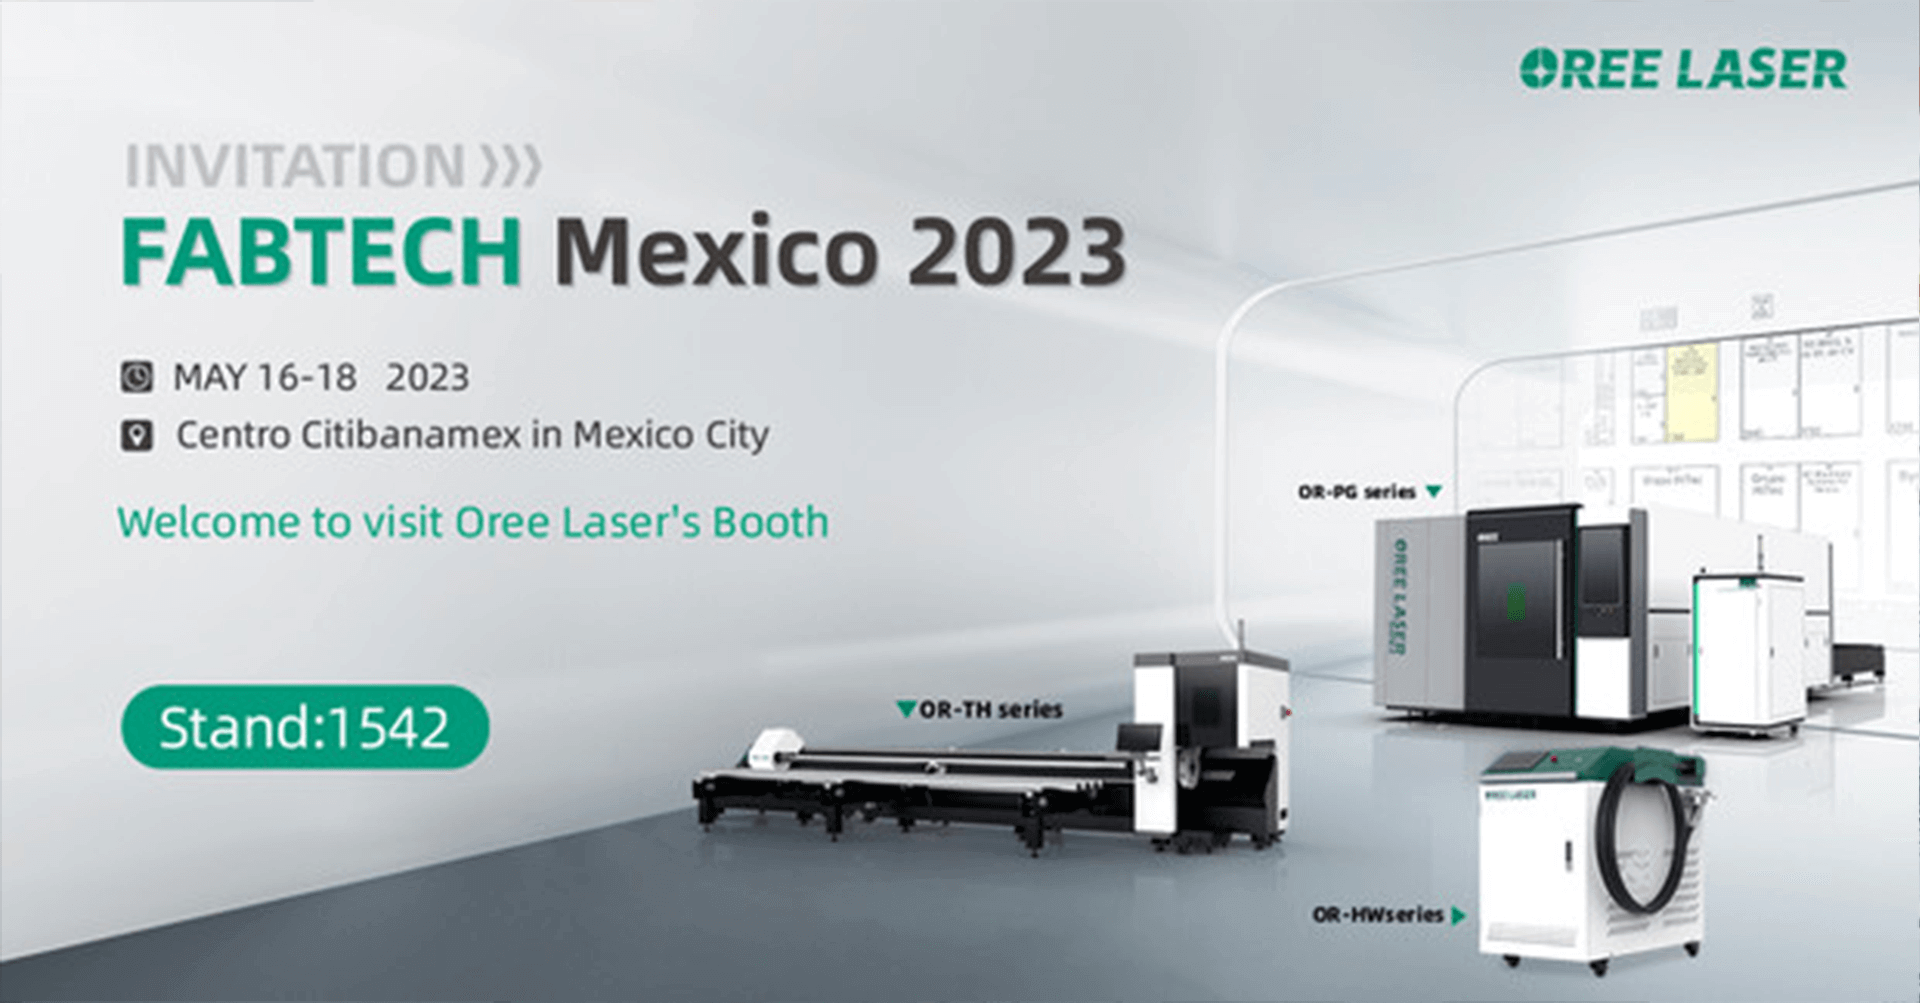 OREE LASER는 FABTECH 2023 Mexico가 5월 16일부터 5월 18일까지 개최되며 OREE Laser가 참석한다고 발표하게 되어 기쁩니다.